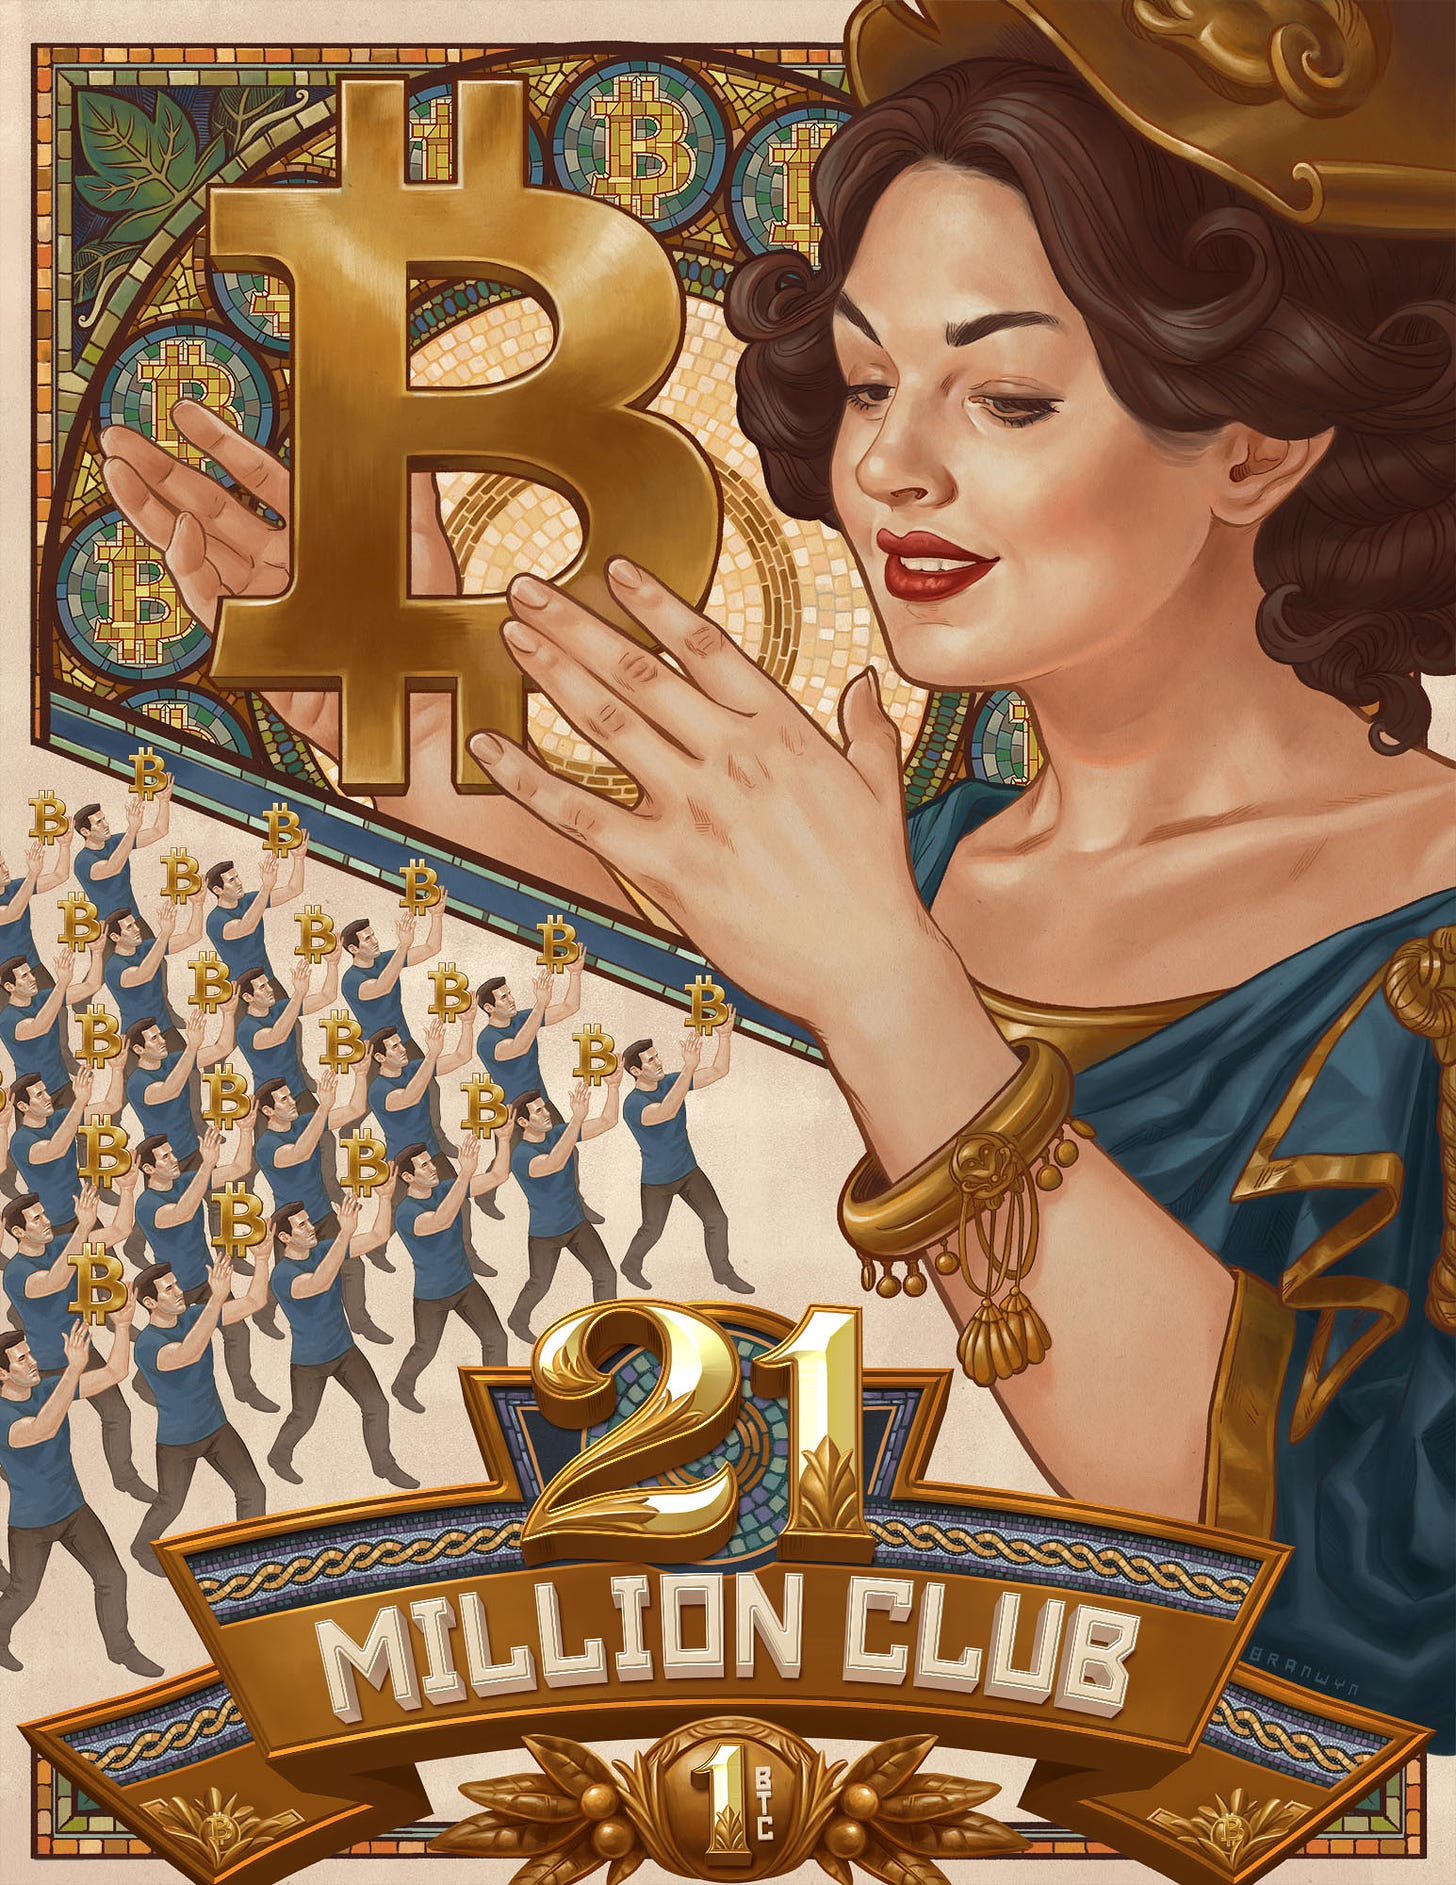 21 Million Bitcoin Club – Cryptoart